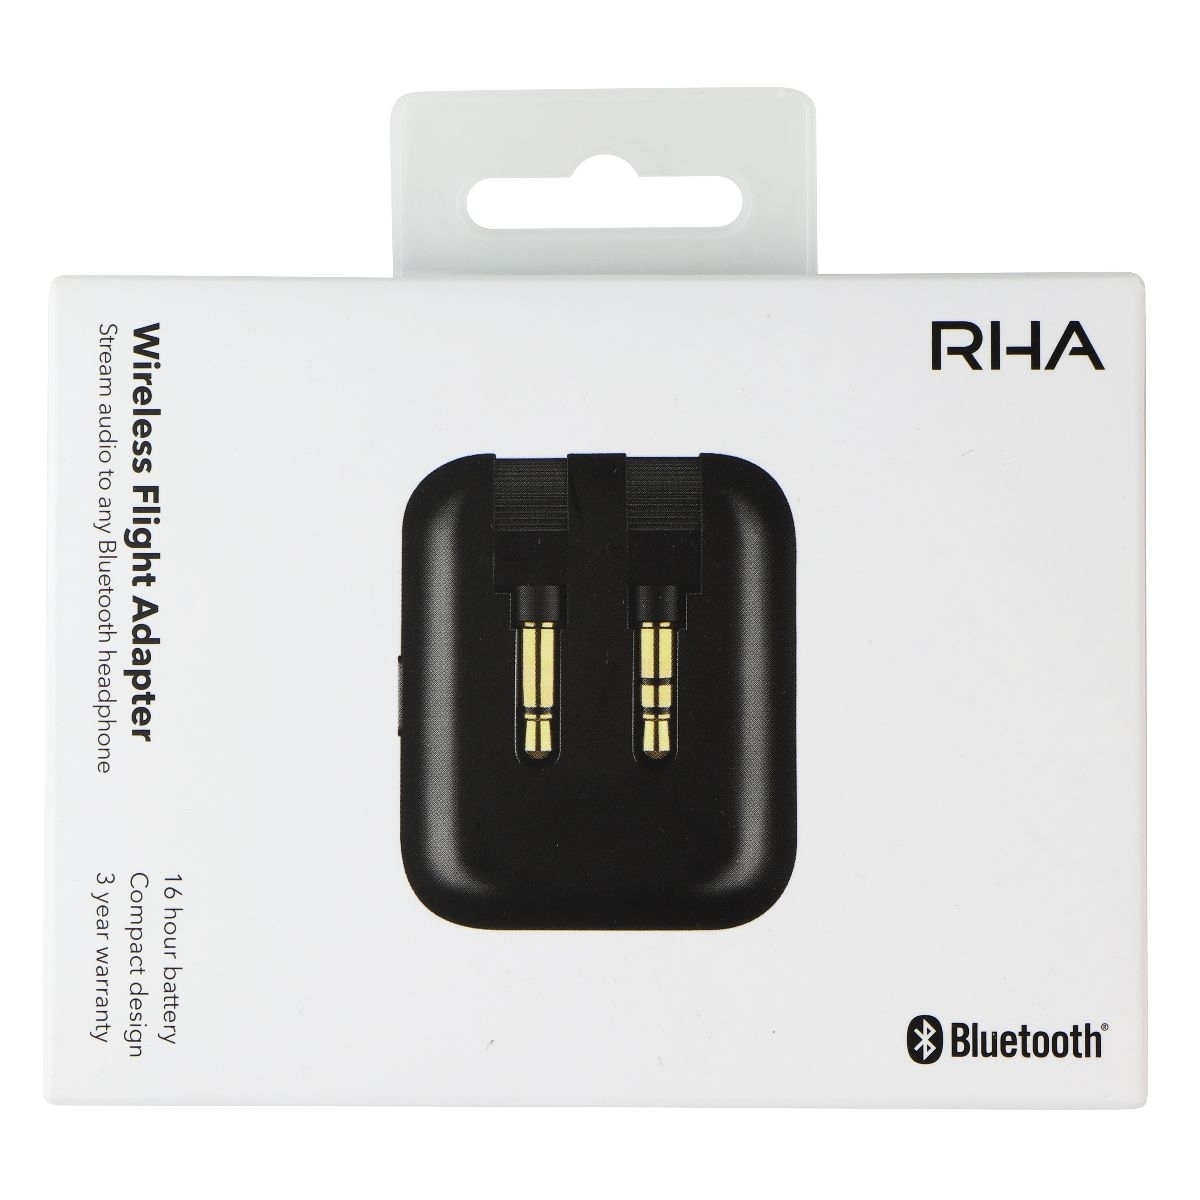 RHA Wireless Bluetooth Flight Adapter For 3.5mm Jacks - Black (601712) (Refurbished)